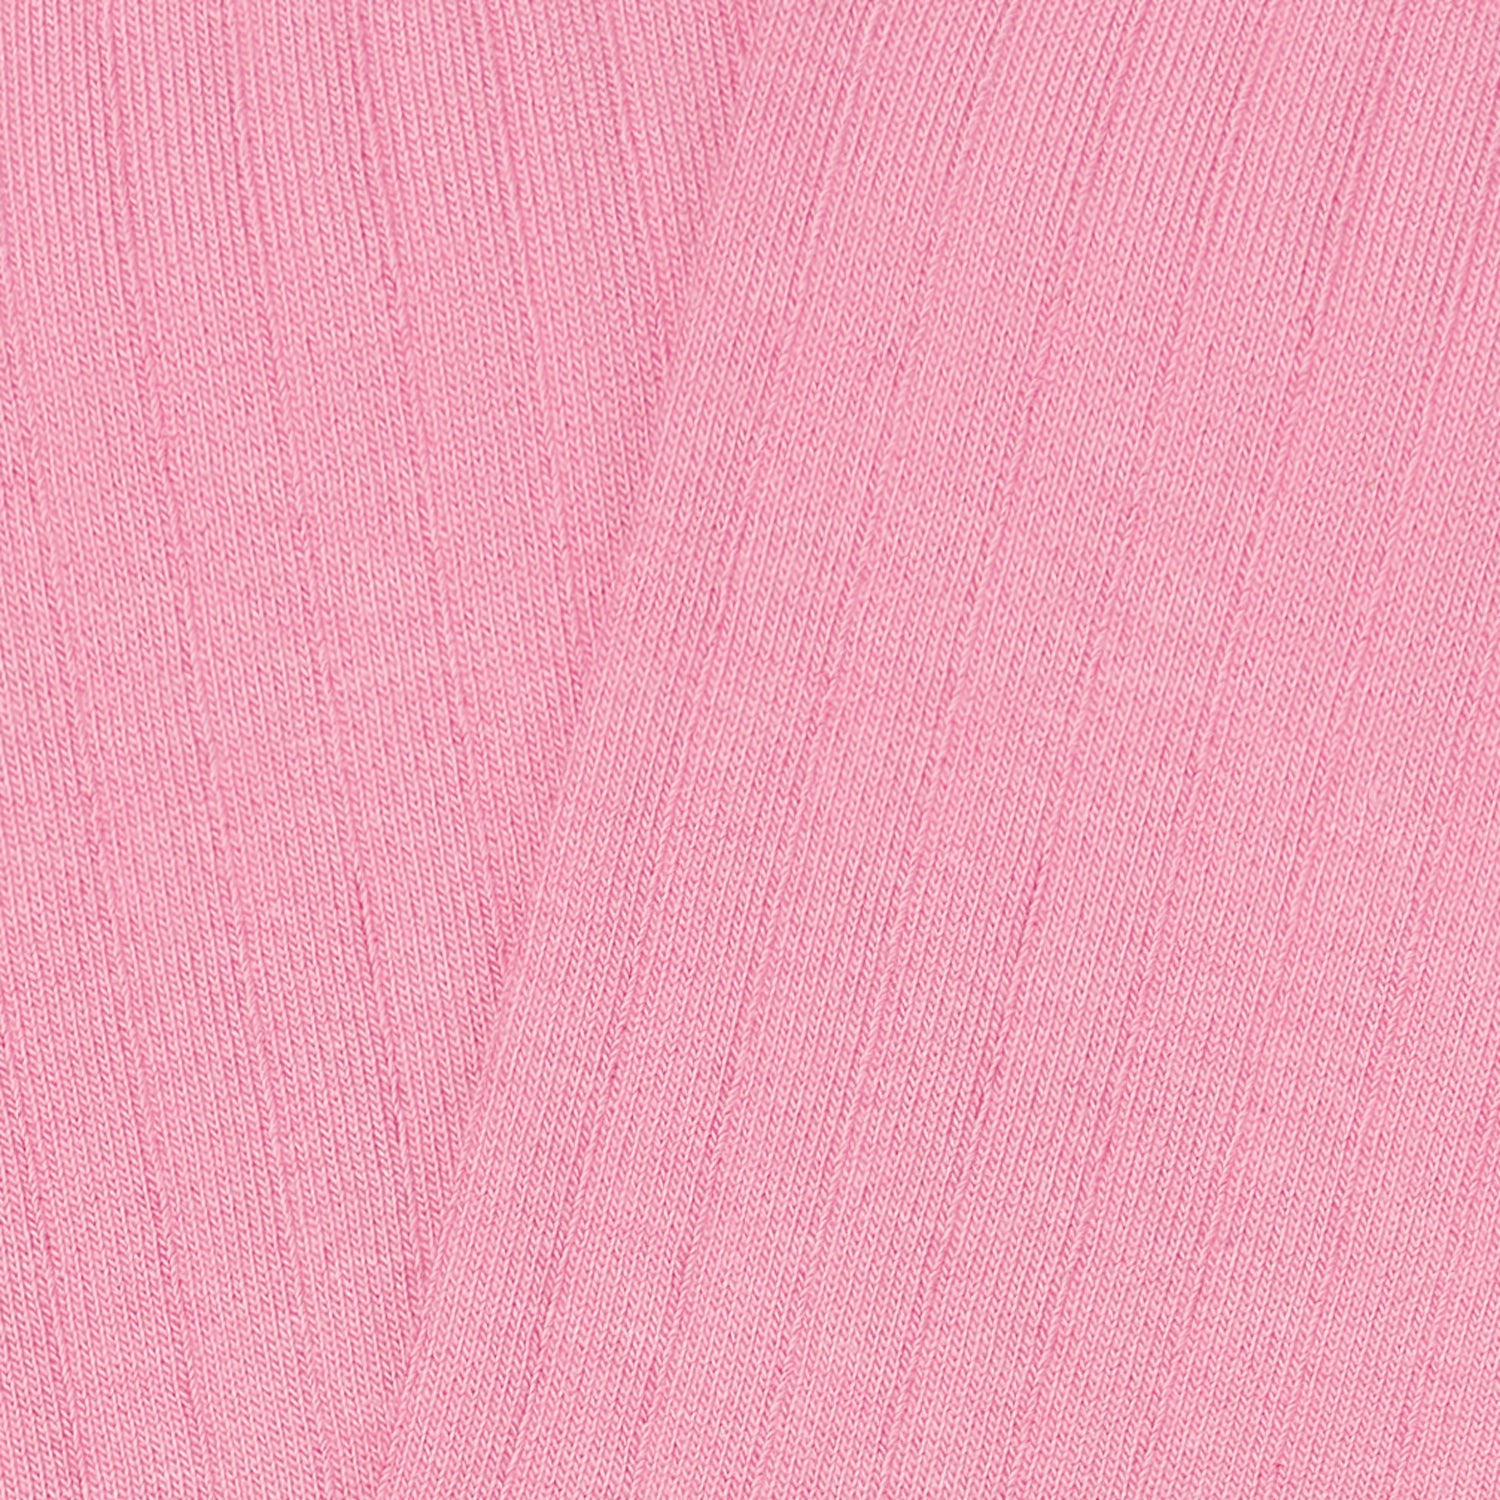 KH Ribbed - Pink (3)